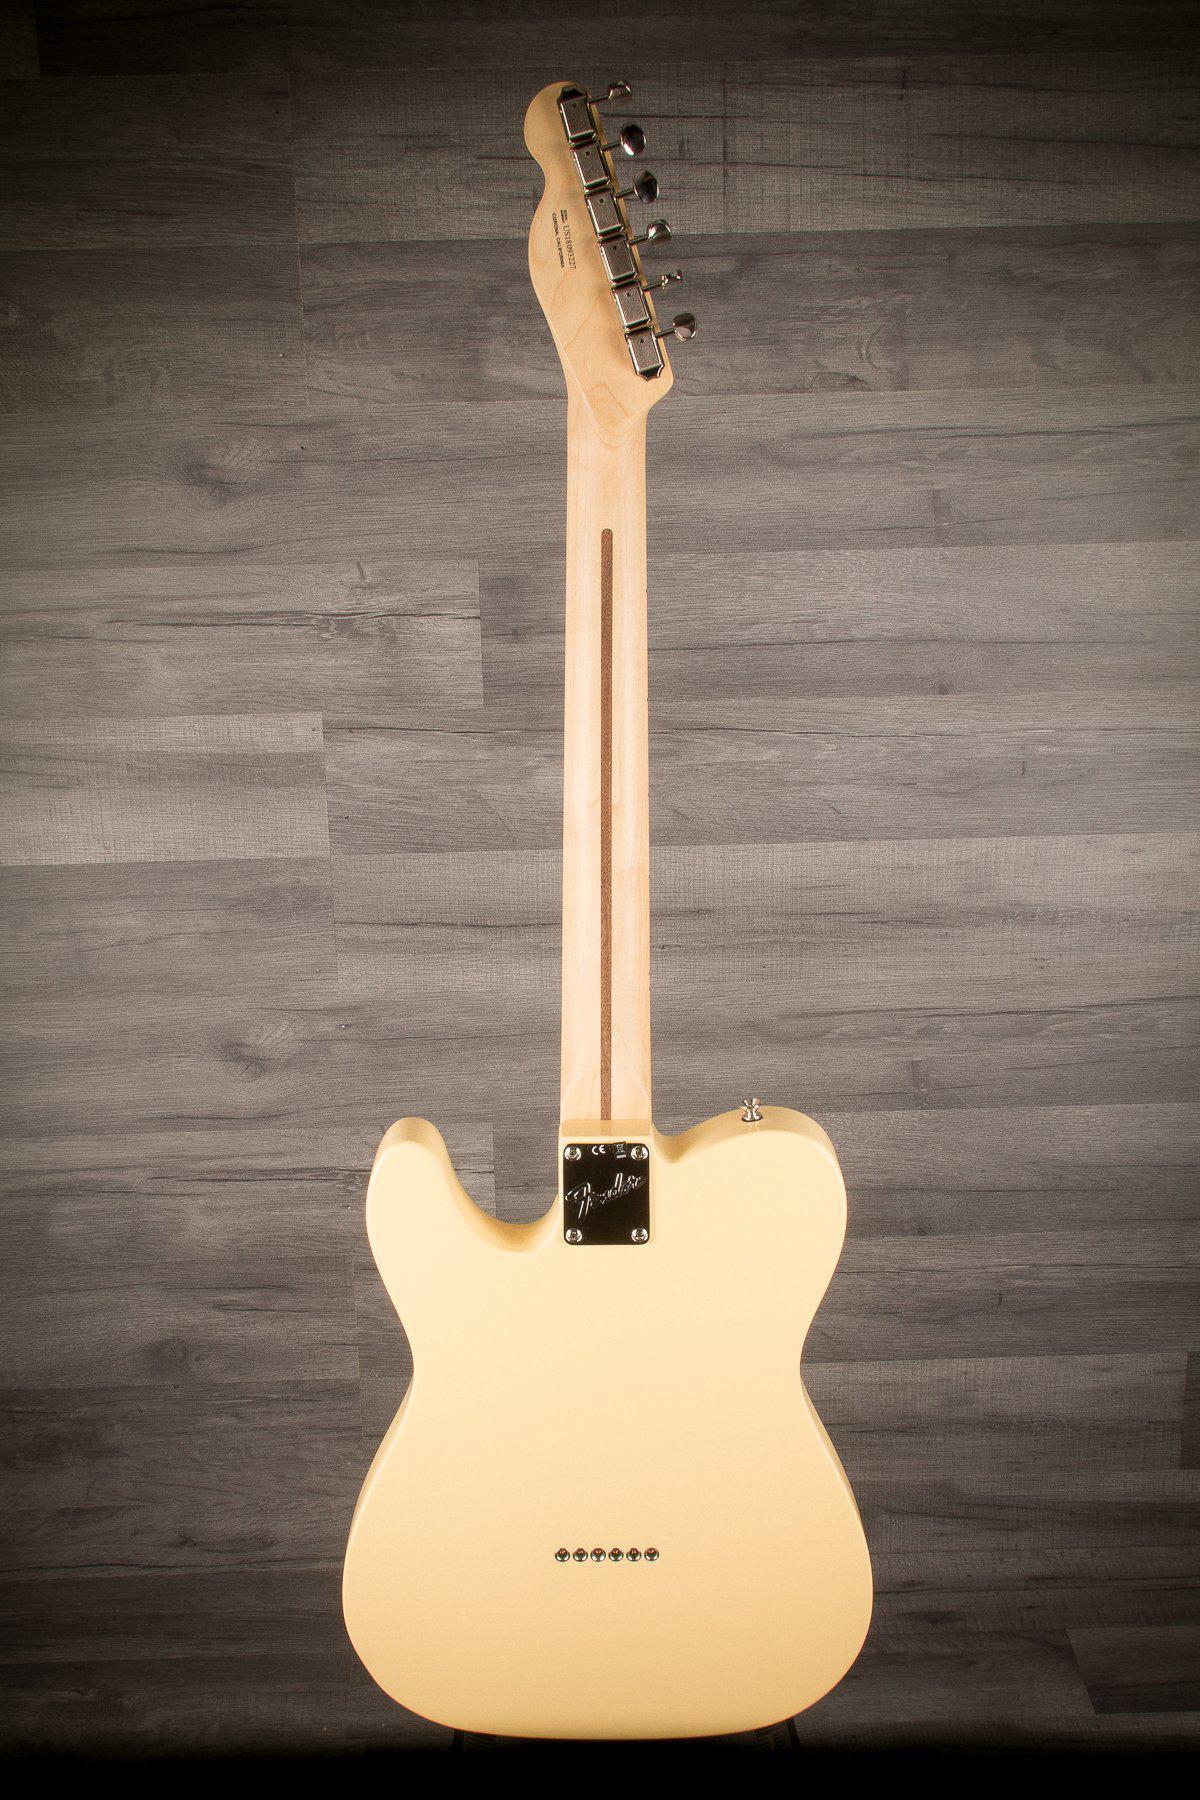 Fender Electric Guitar Fender American Performer Series Tele Maple neck Electric Guitar - Vintage White